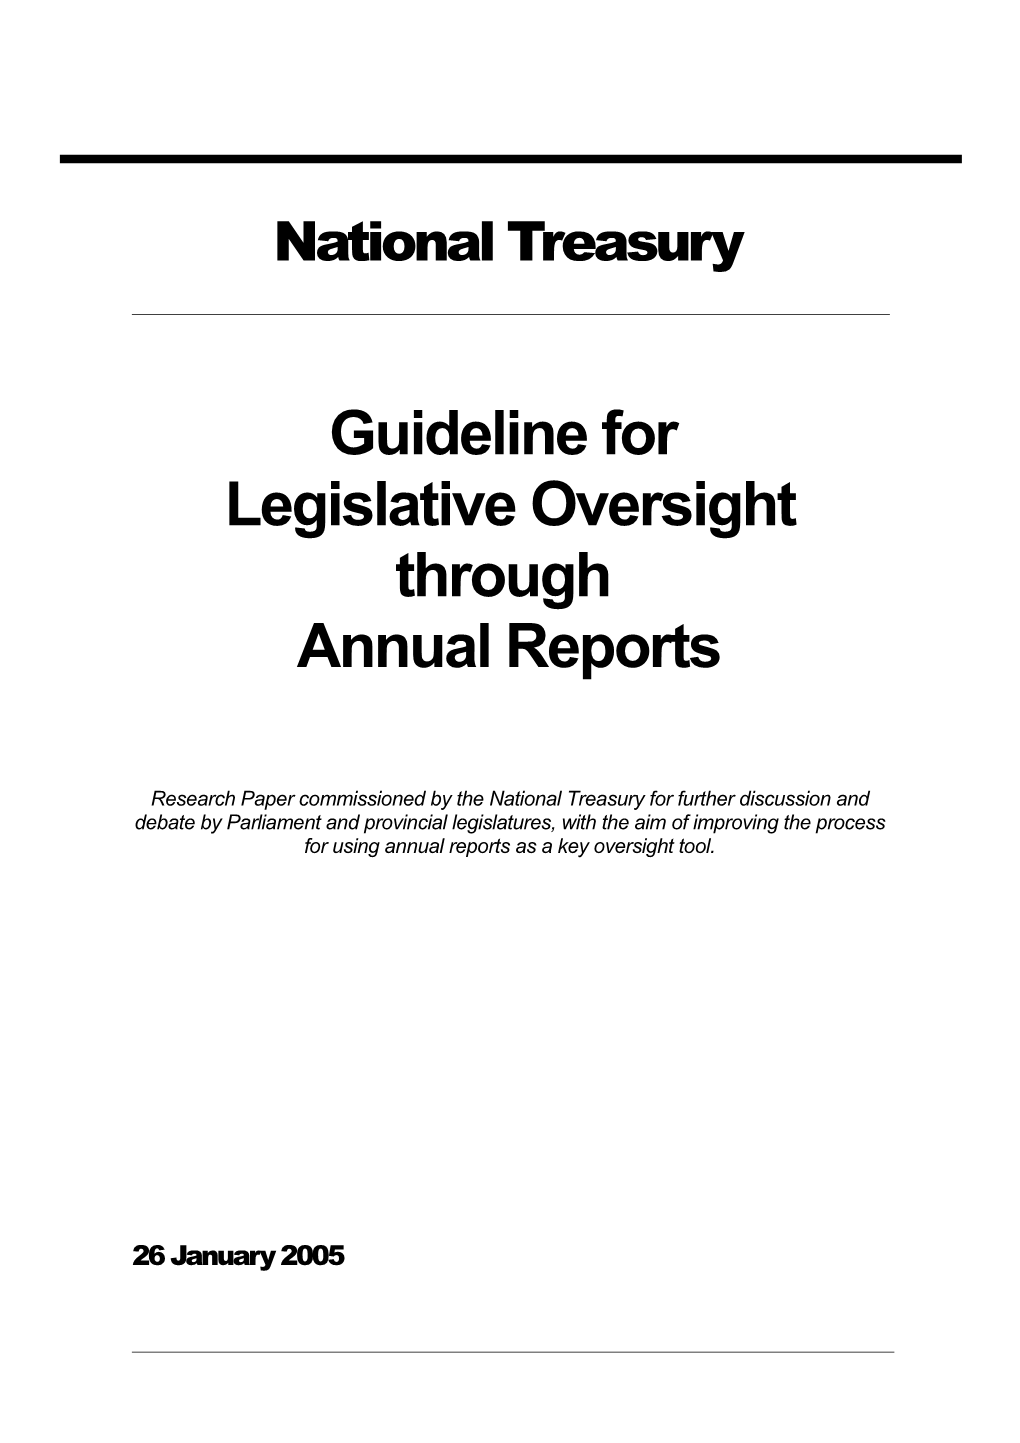 Legislative Oversight of Annual Reports